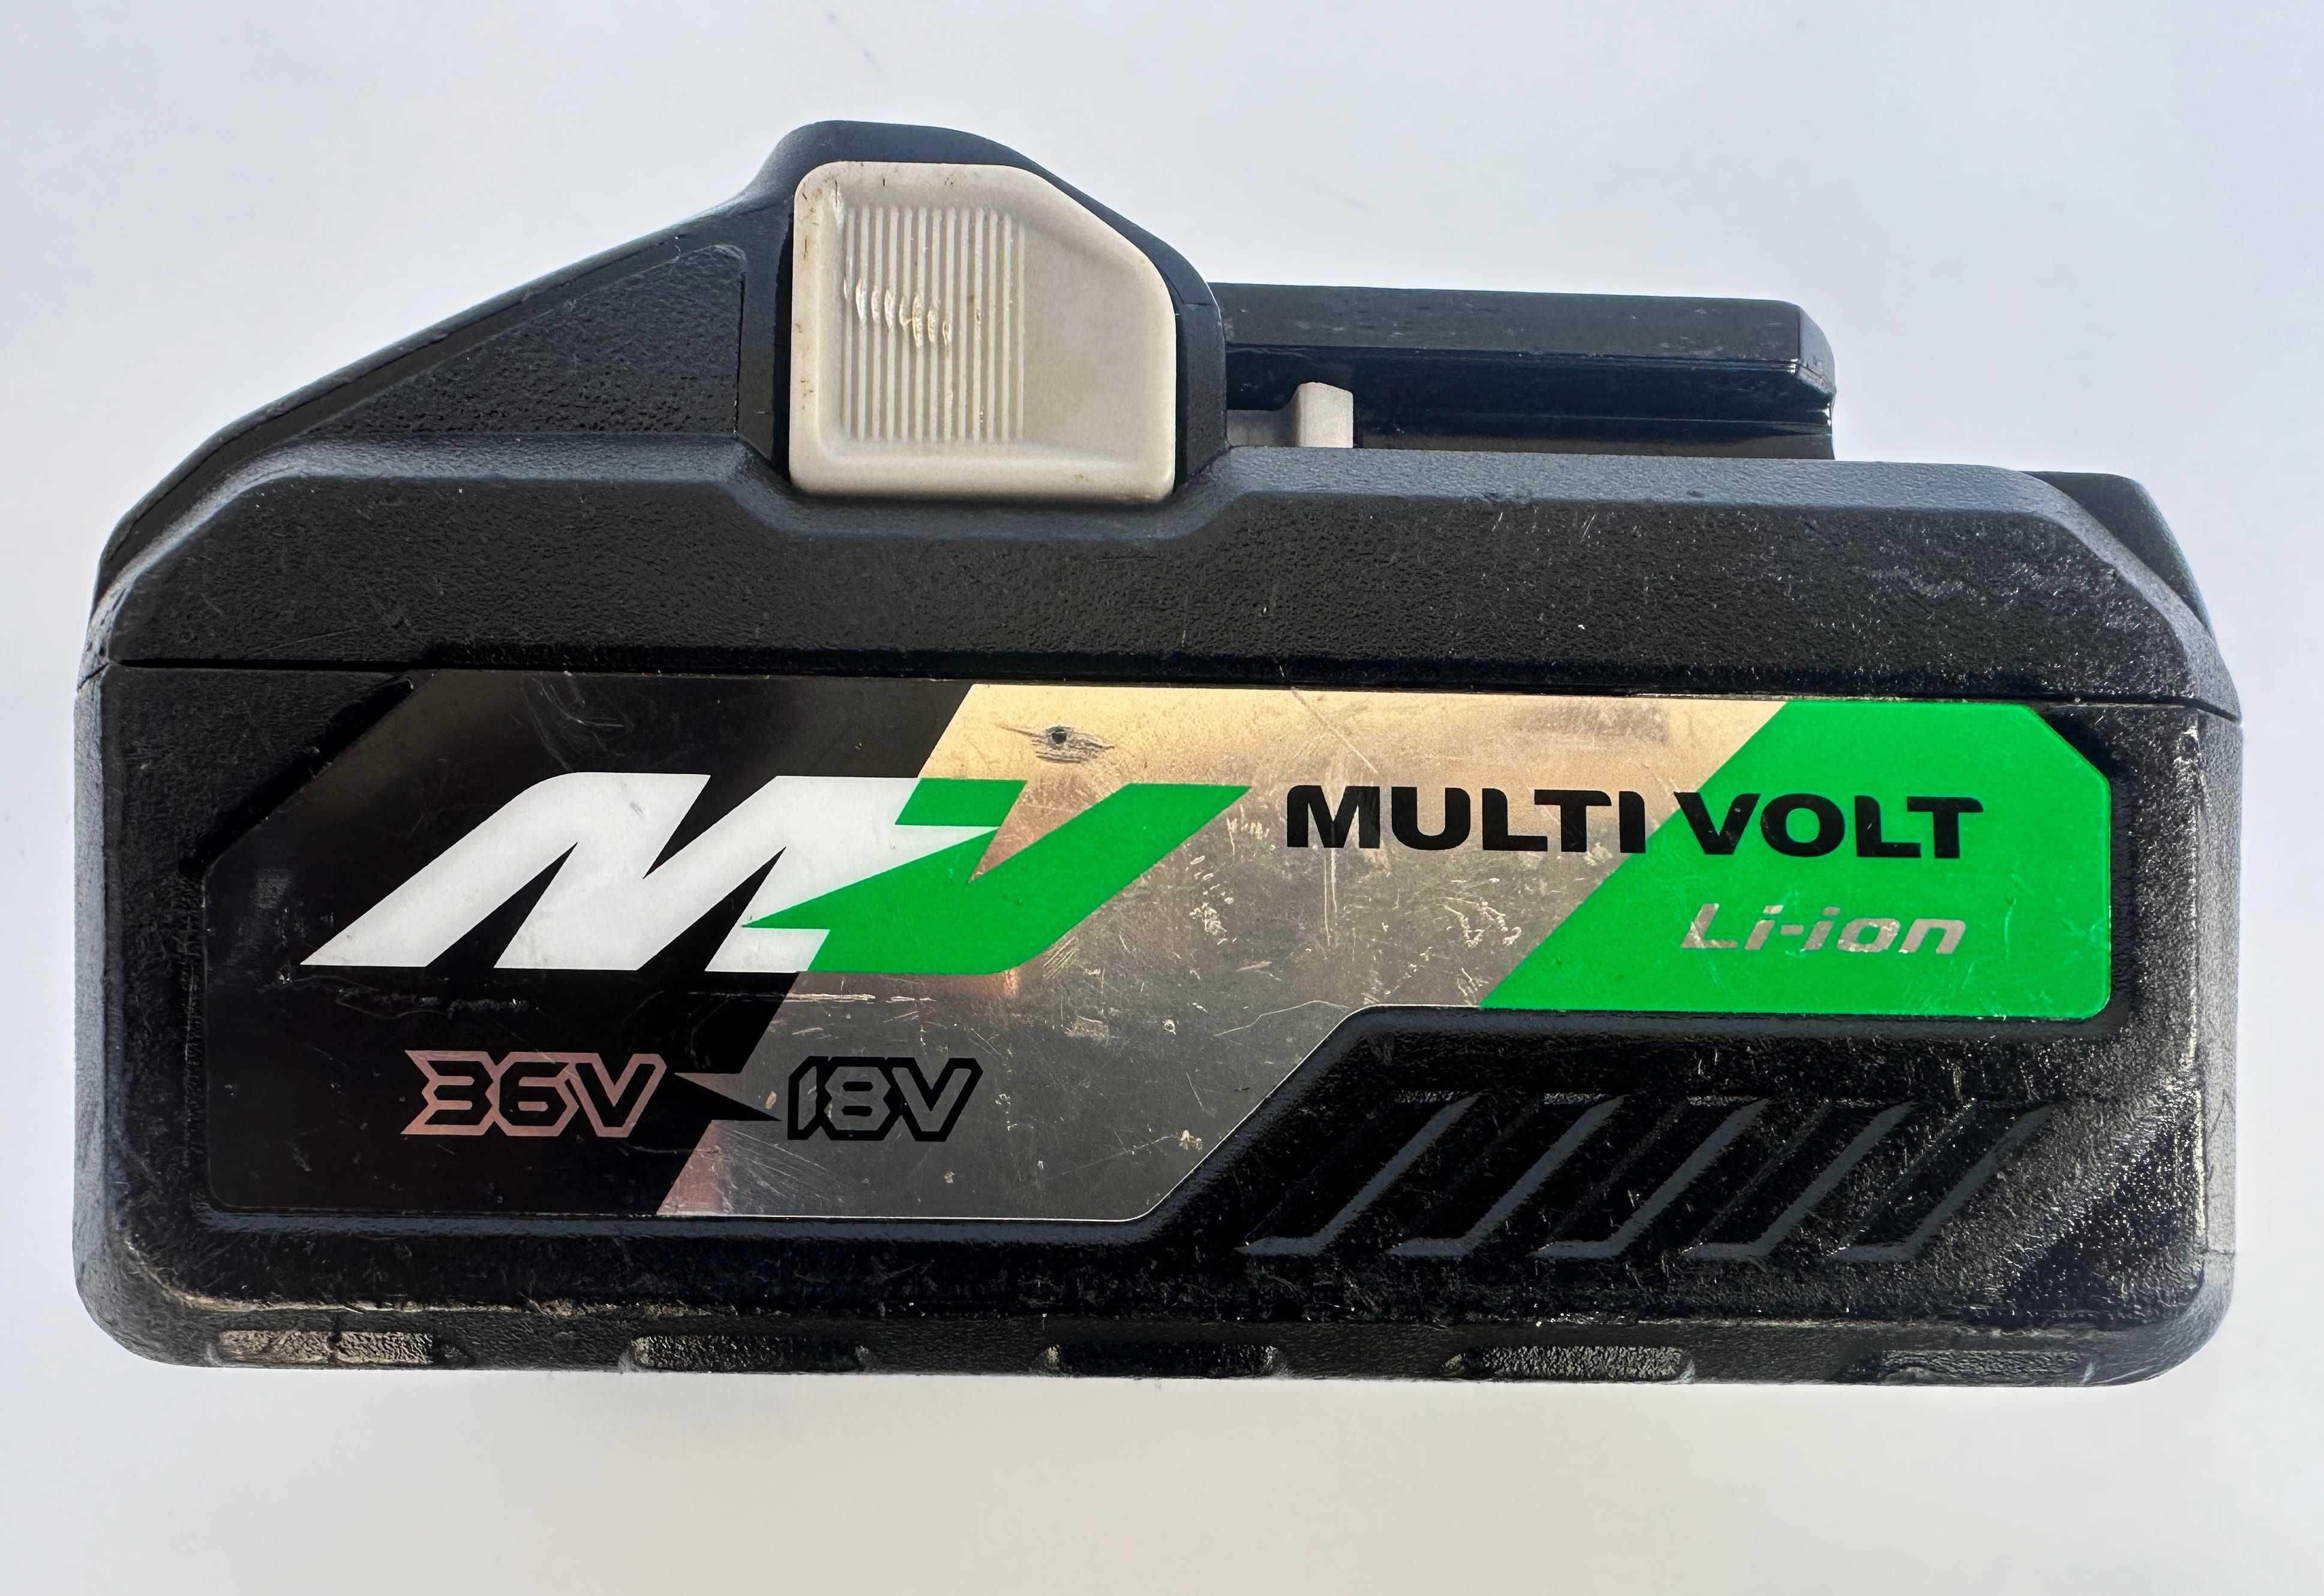 Hikoki MULTI VOLT BSL36B18 - Акумулаторна батерия 18/36V  8.0/4.0Ah